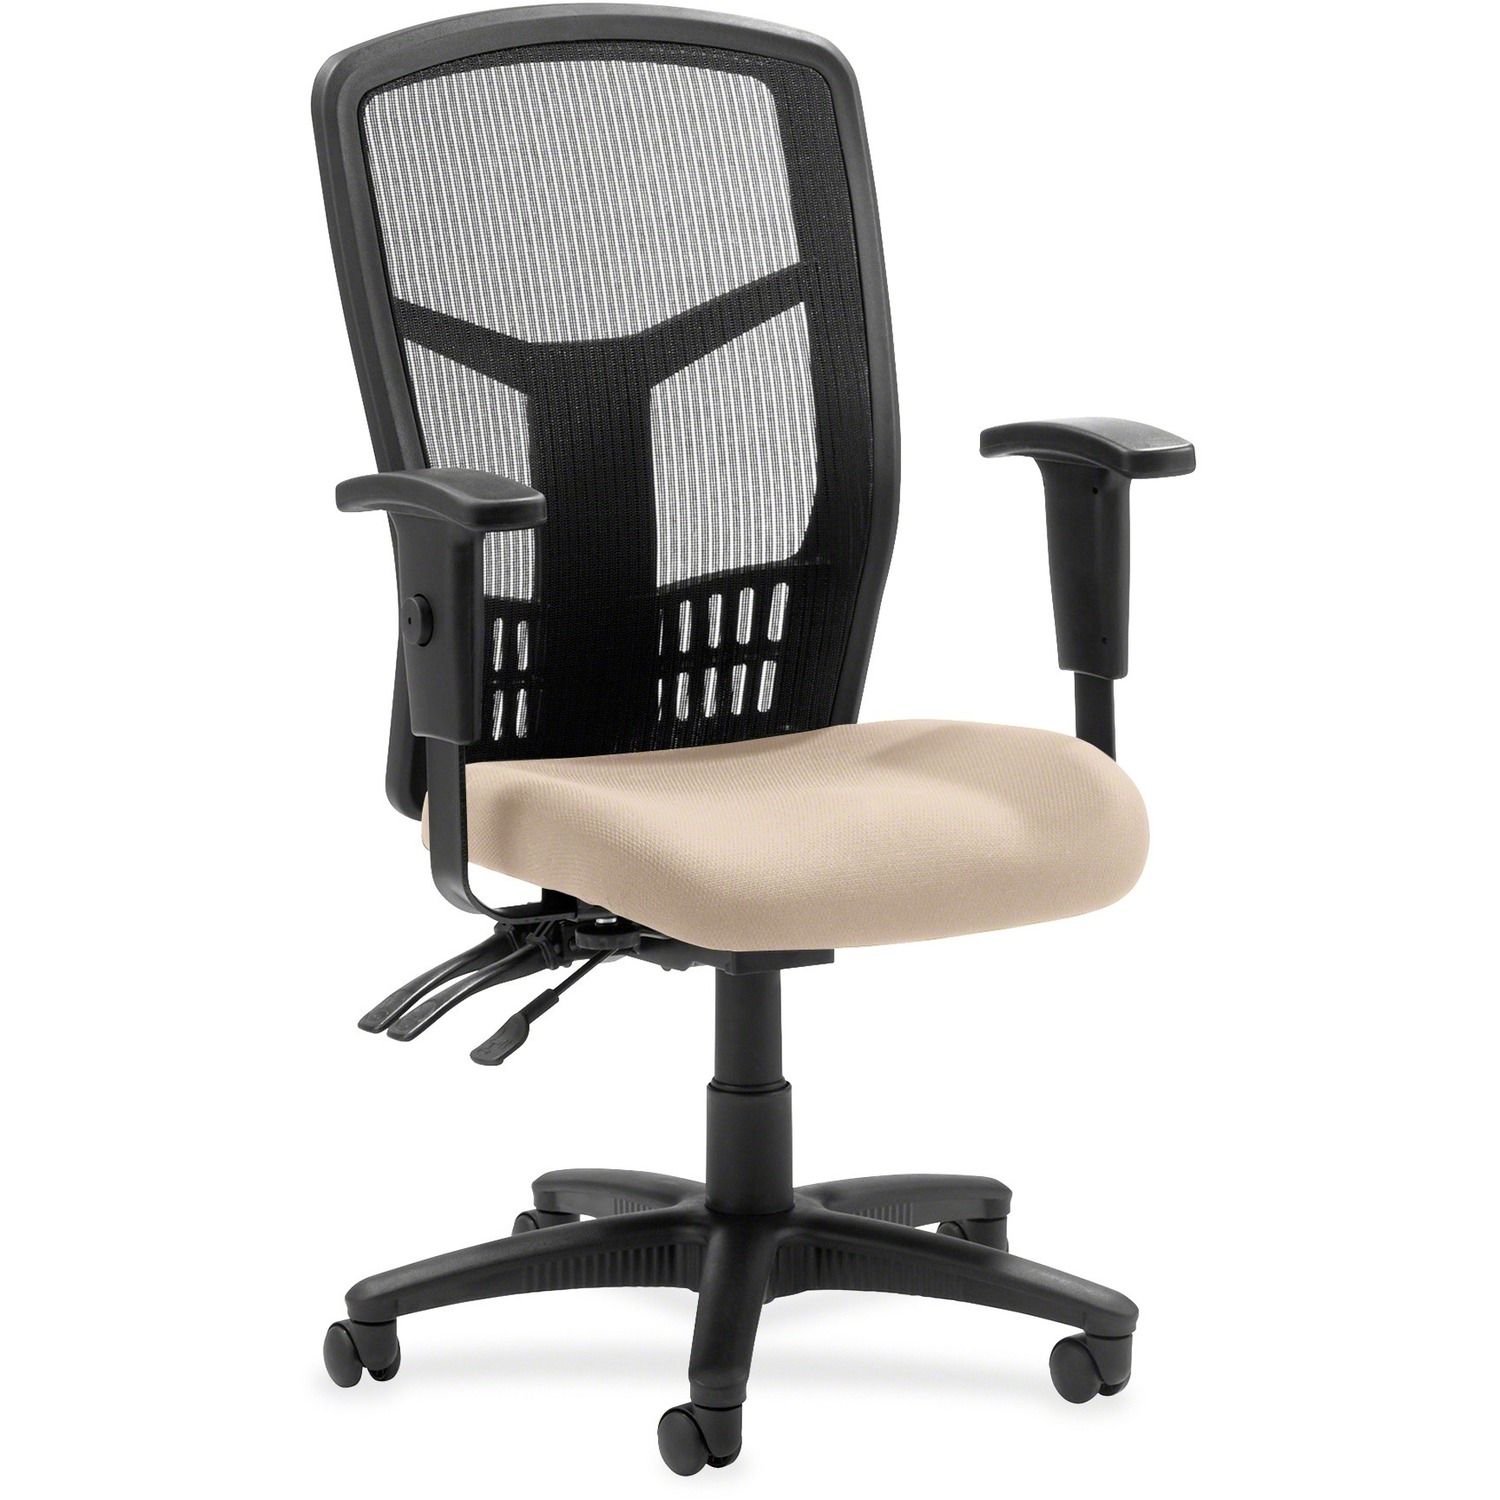 ErgoMesh Series Executive Mesh Back Chair Simplicity Azure Mesh Fabric Seat, Black Back, Black Frame, 5-star Base, Black, 1 Each